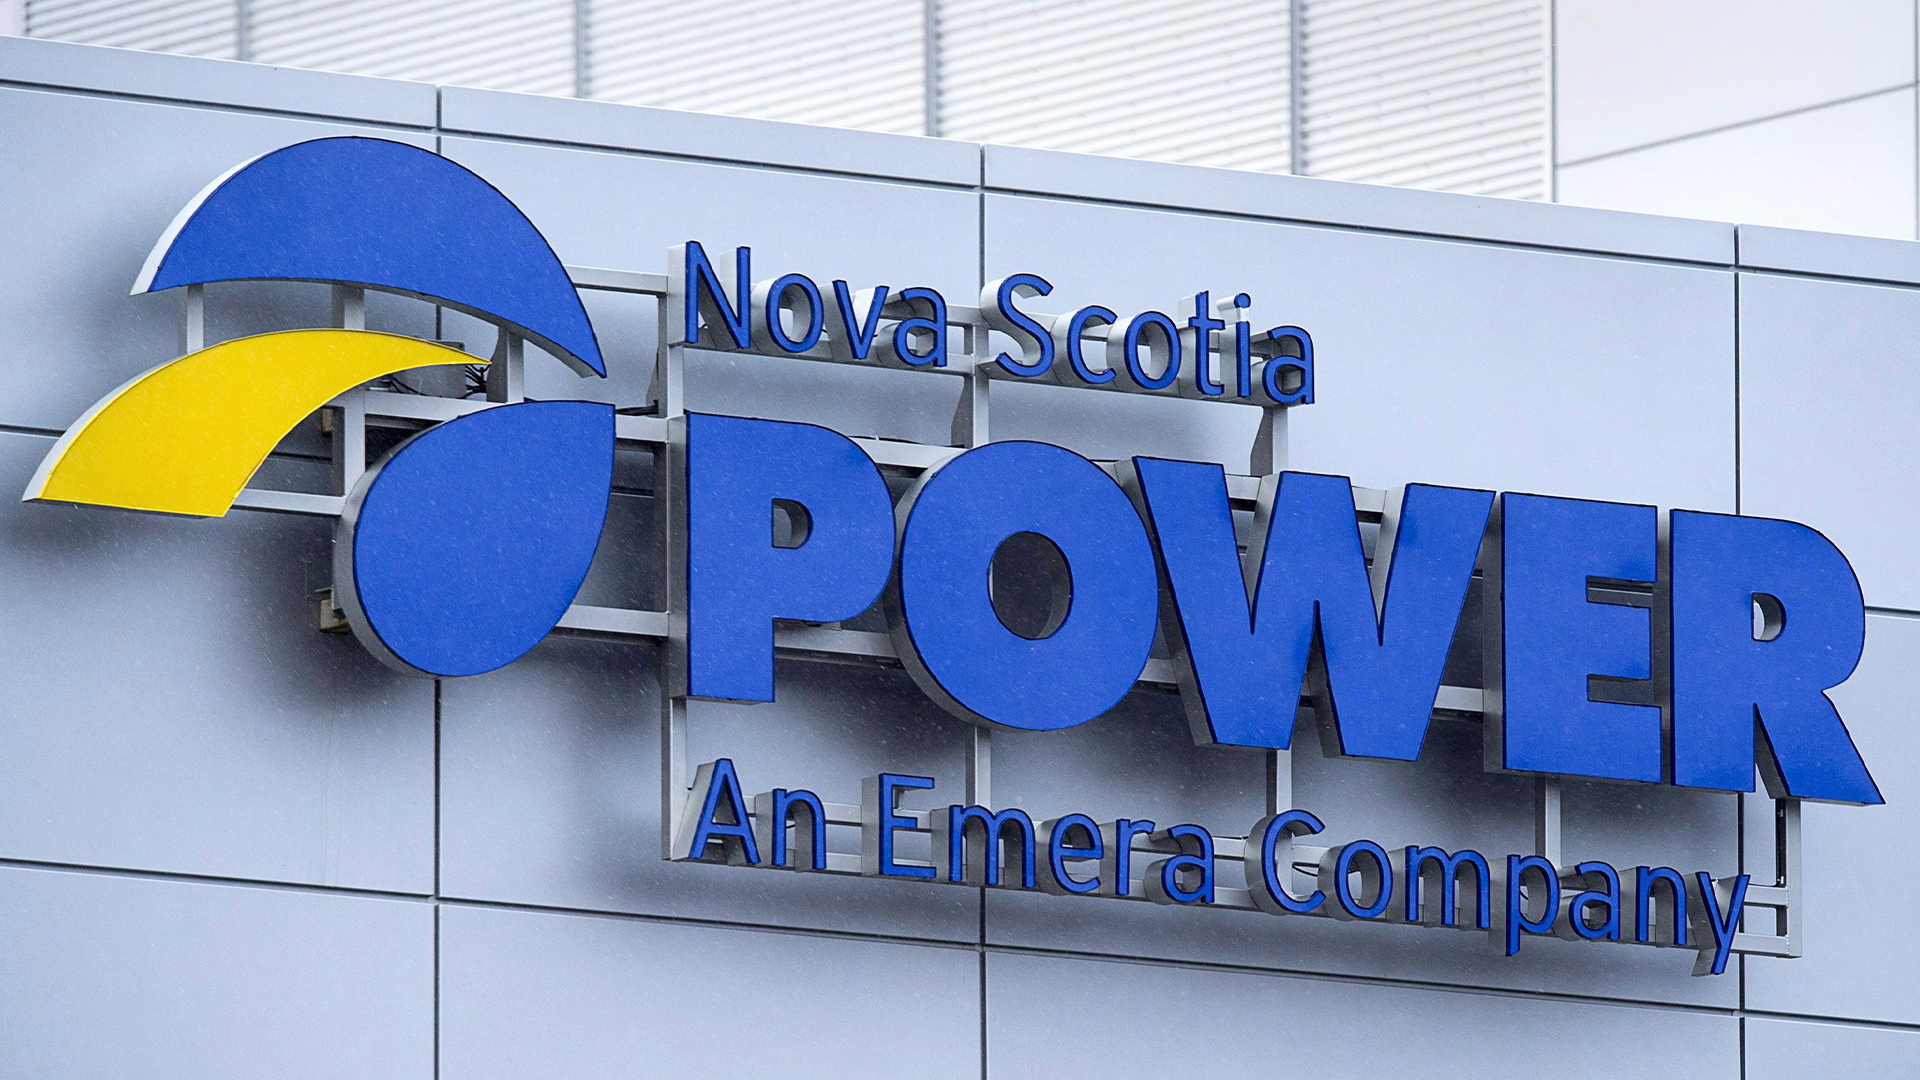 Le siège social de Nova Scotia Power est vu à Halifax le jeudi 29 novembre 2018.